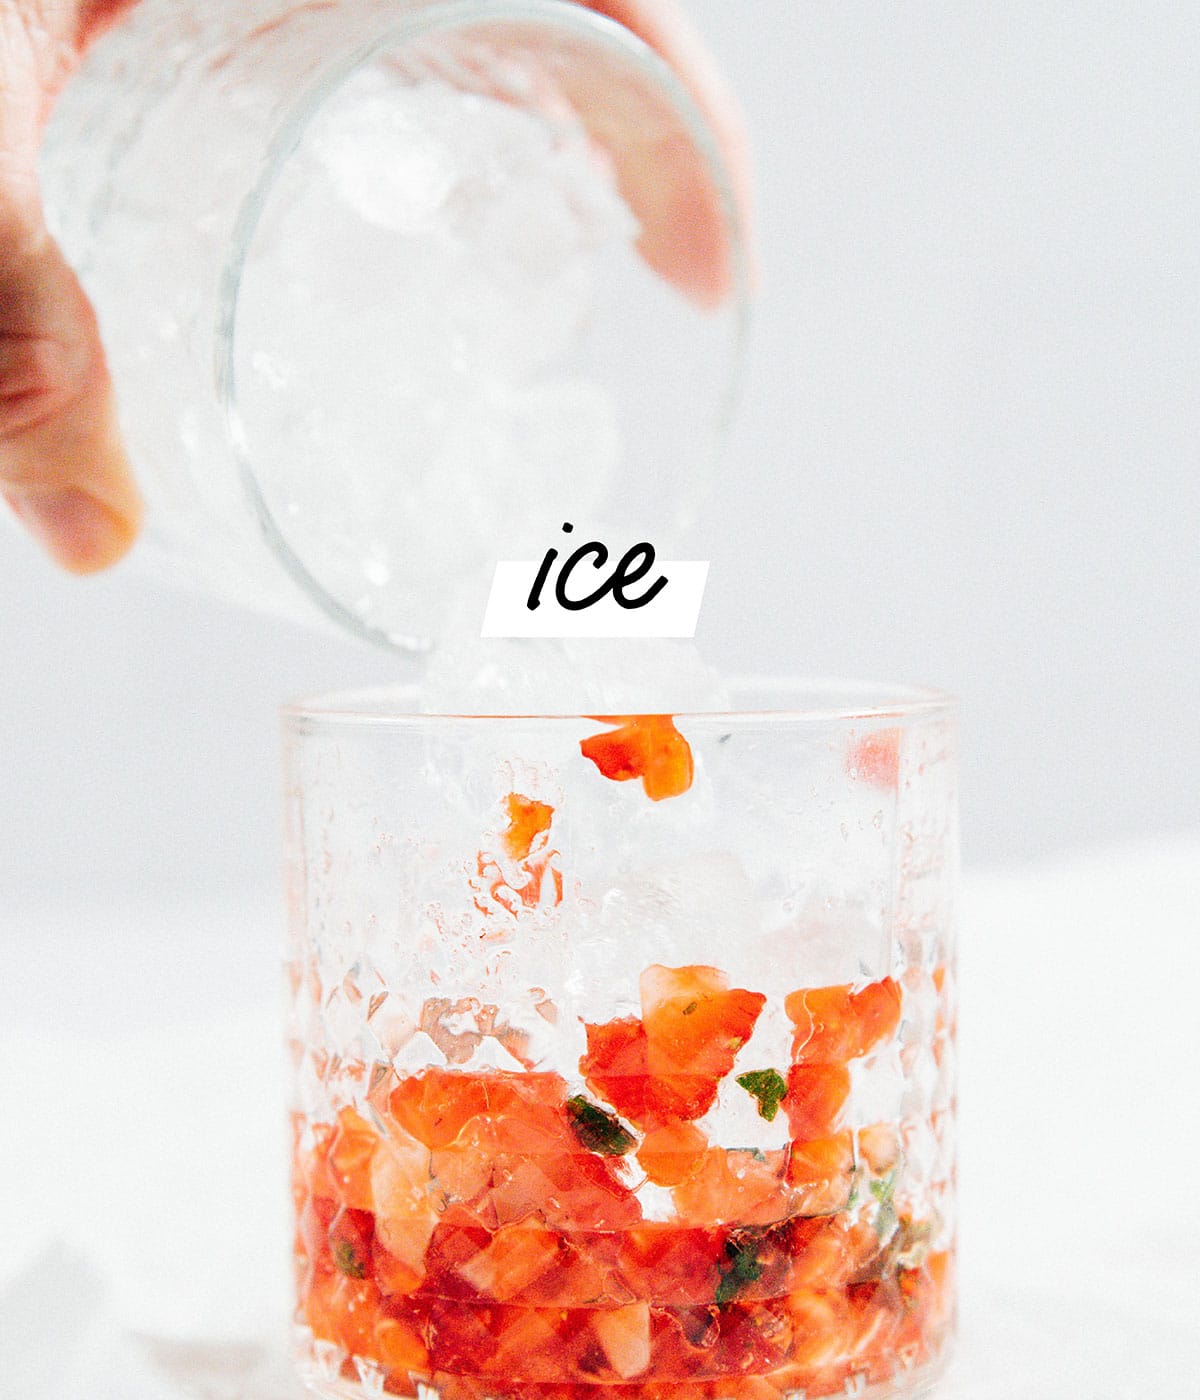 Adding ice to a glass to make strawberry mojitos.